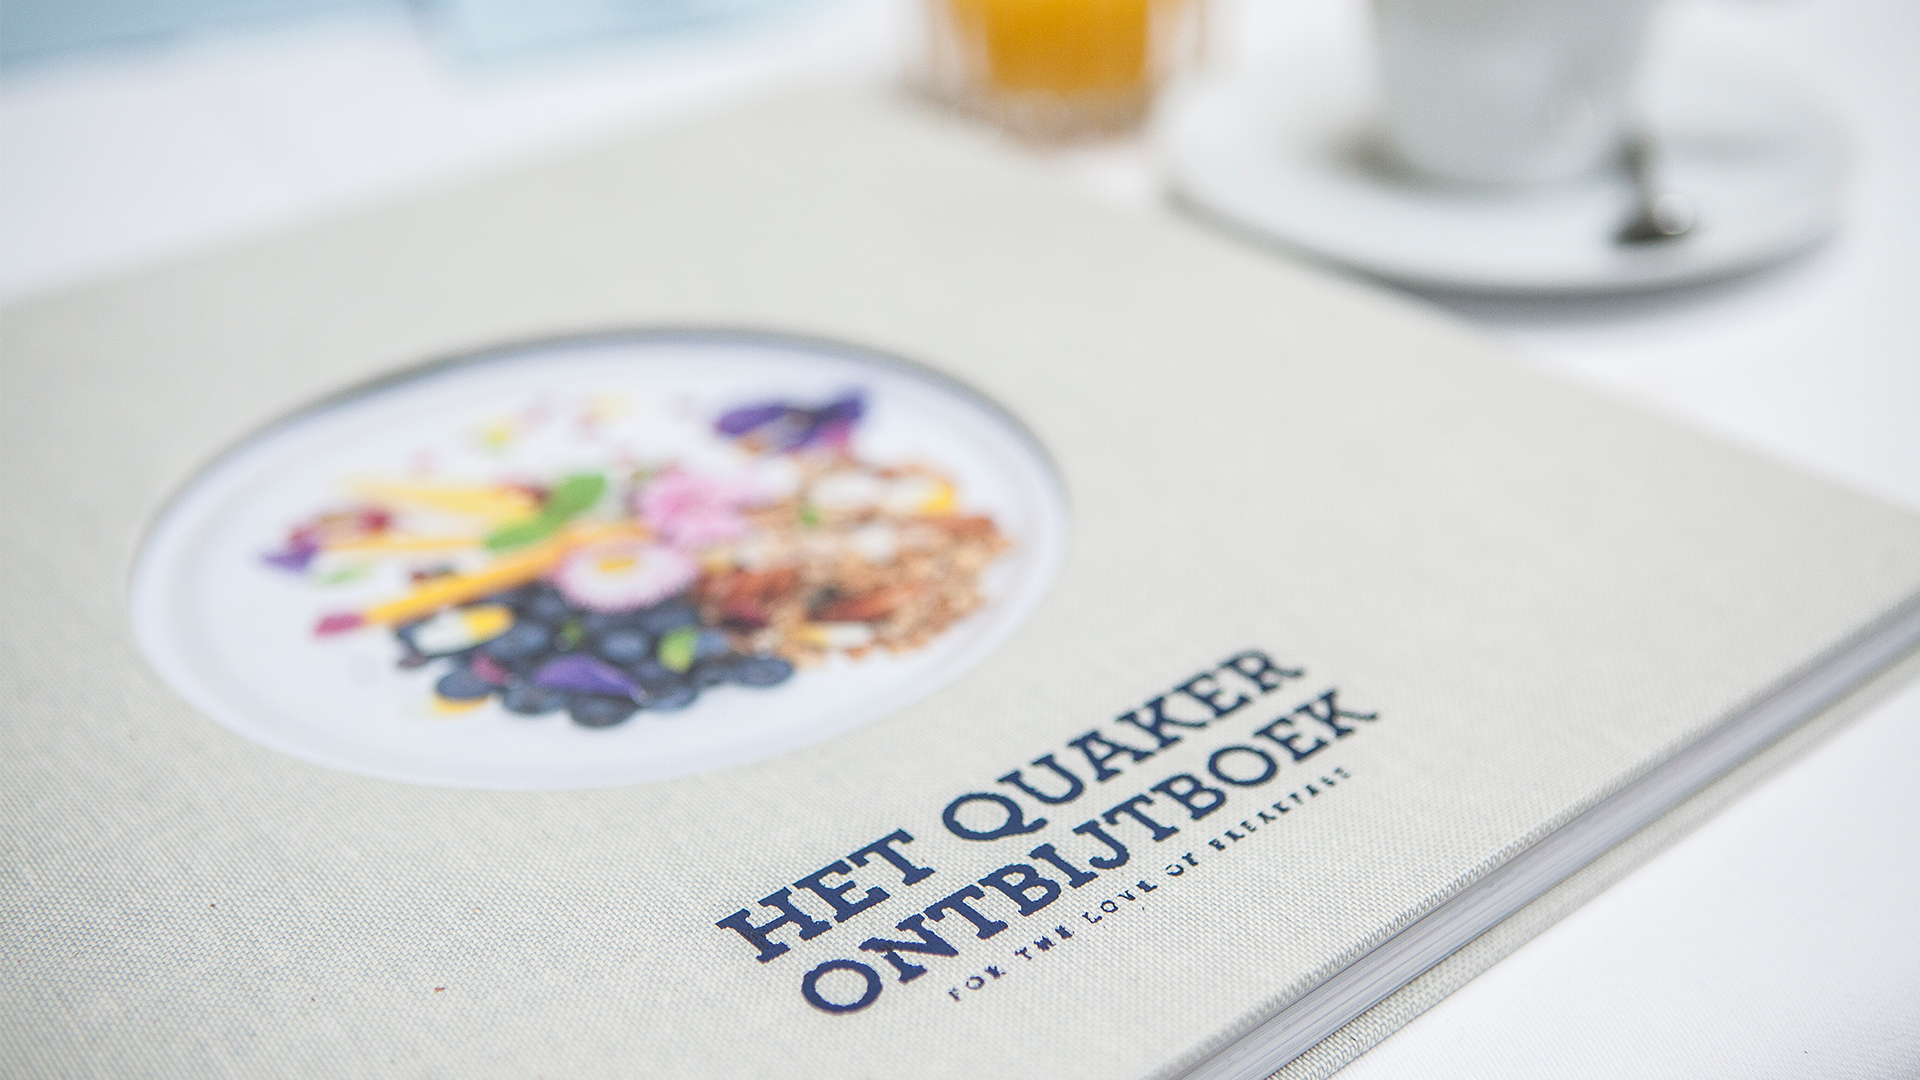 The Quaker breakfast book